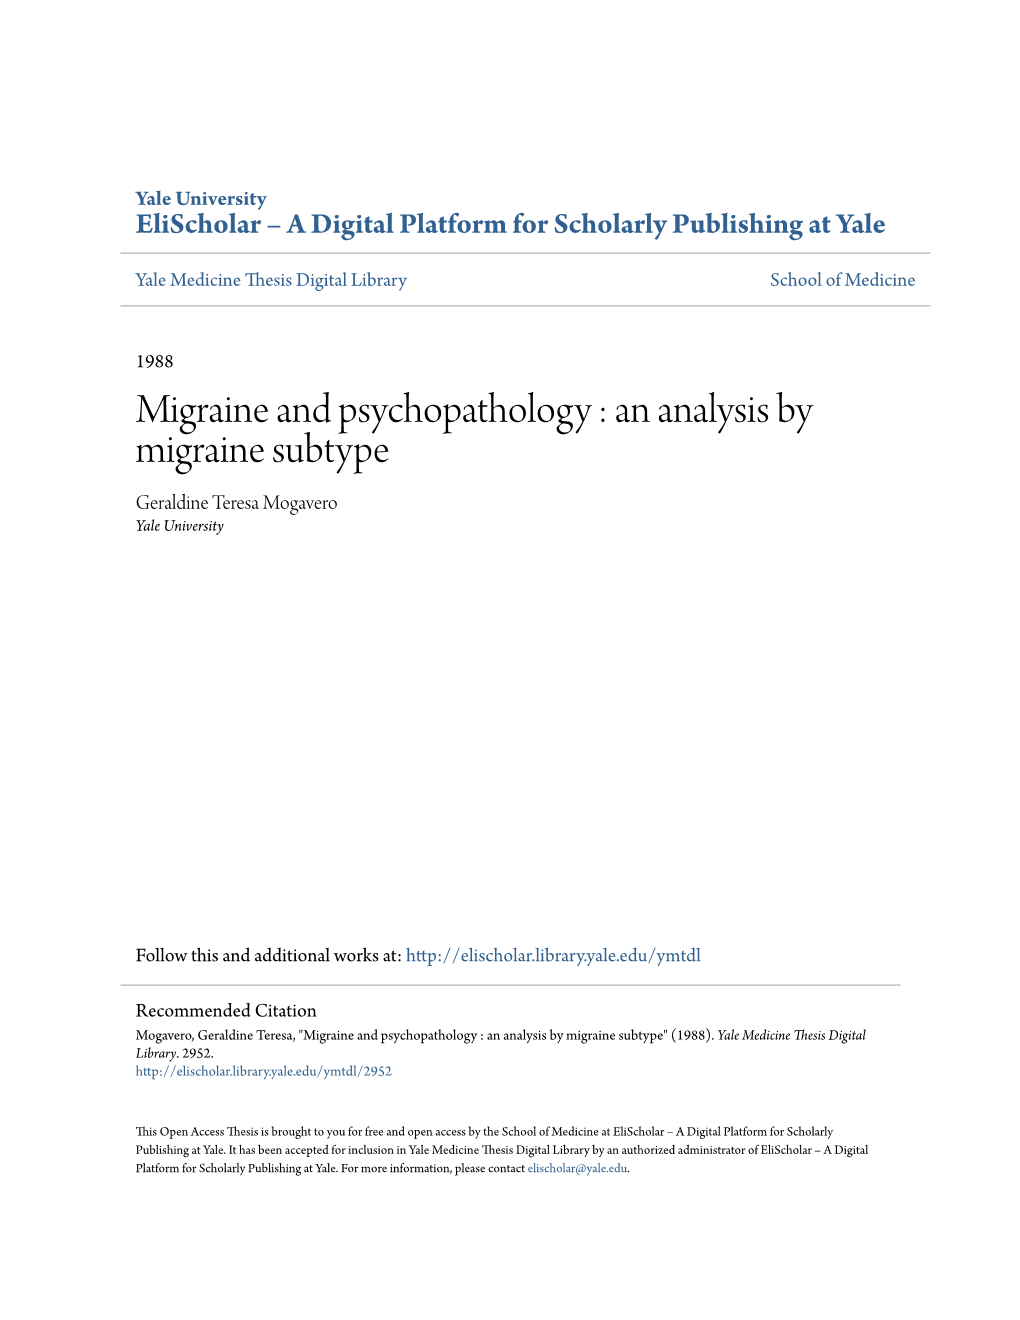 Migraine and Psychopathology : an Analysis by Migraine Subtype Geraldine Teresa Mogavero Yale University